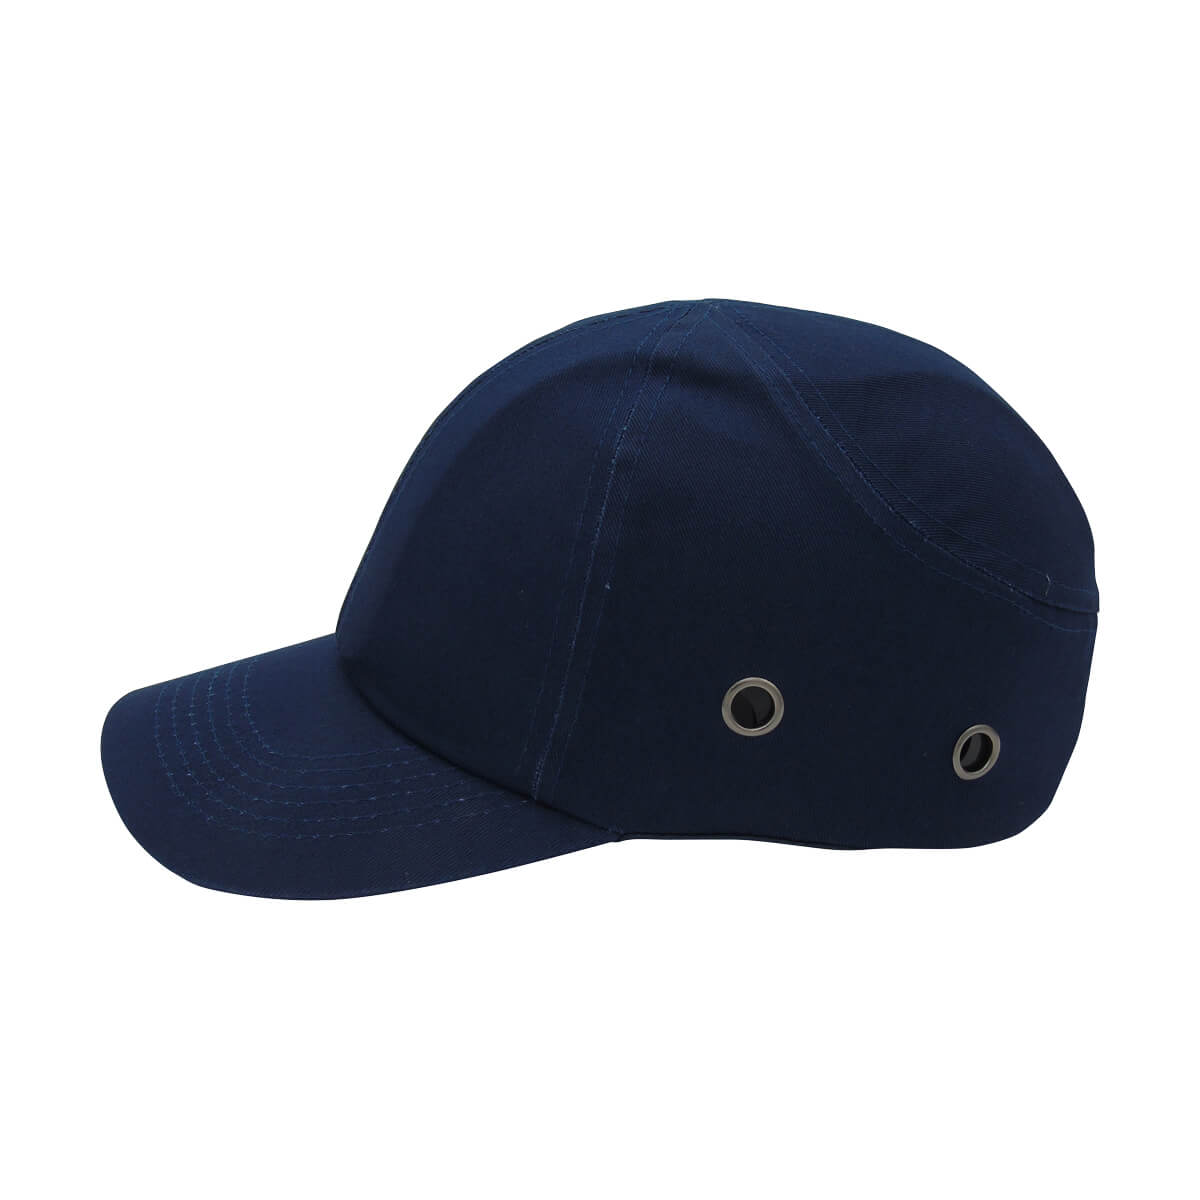 Baseball Cap-Style Bump Cap - Navy Blue